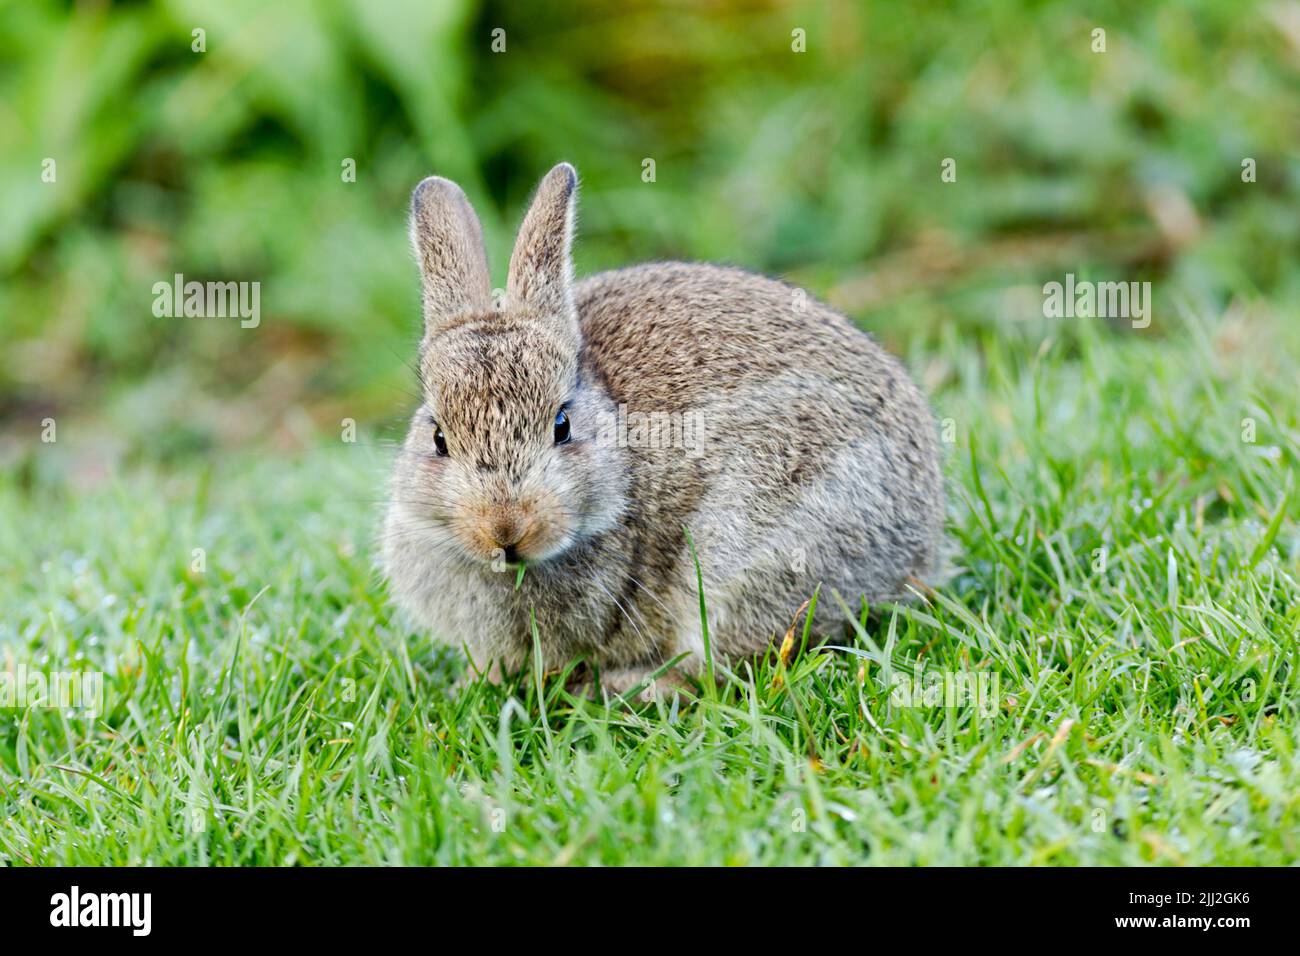 Wild rabbit, Latin name Oryctolagus cuniculus, grazing on a garden lawn Stock Photo